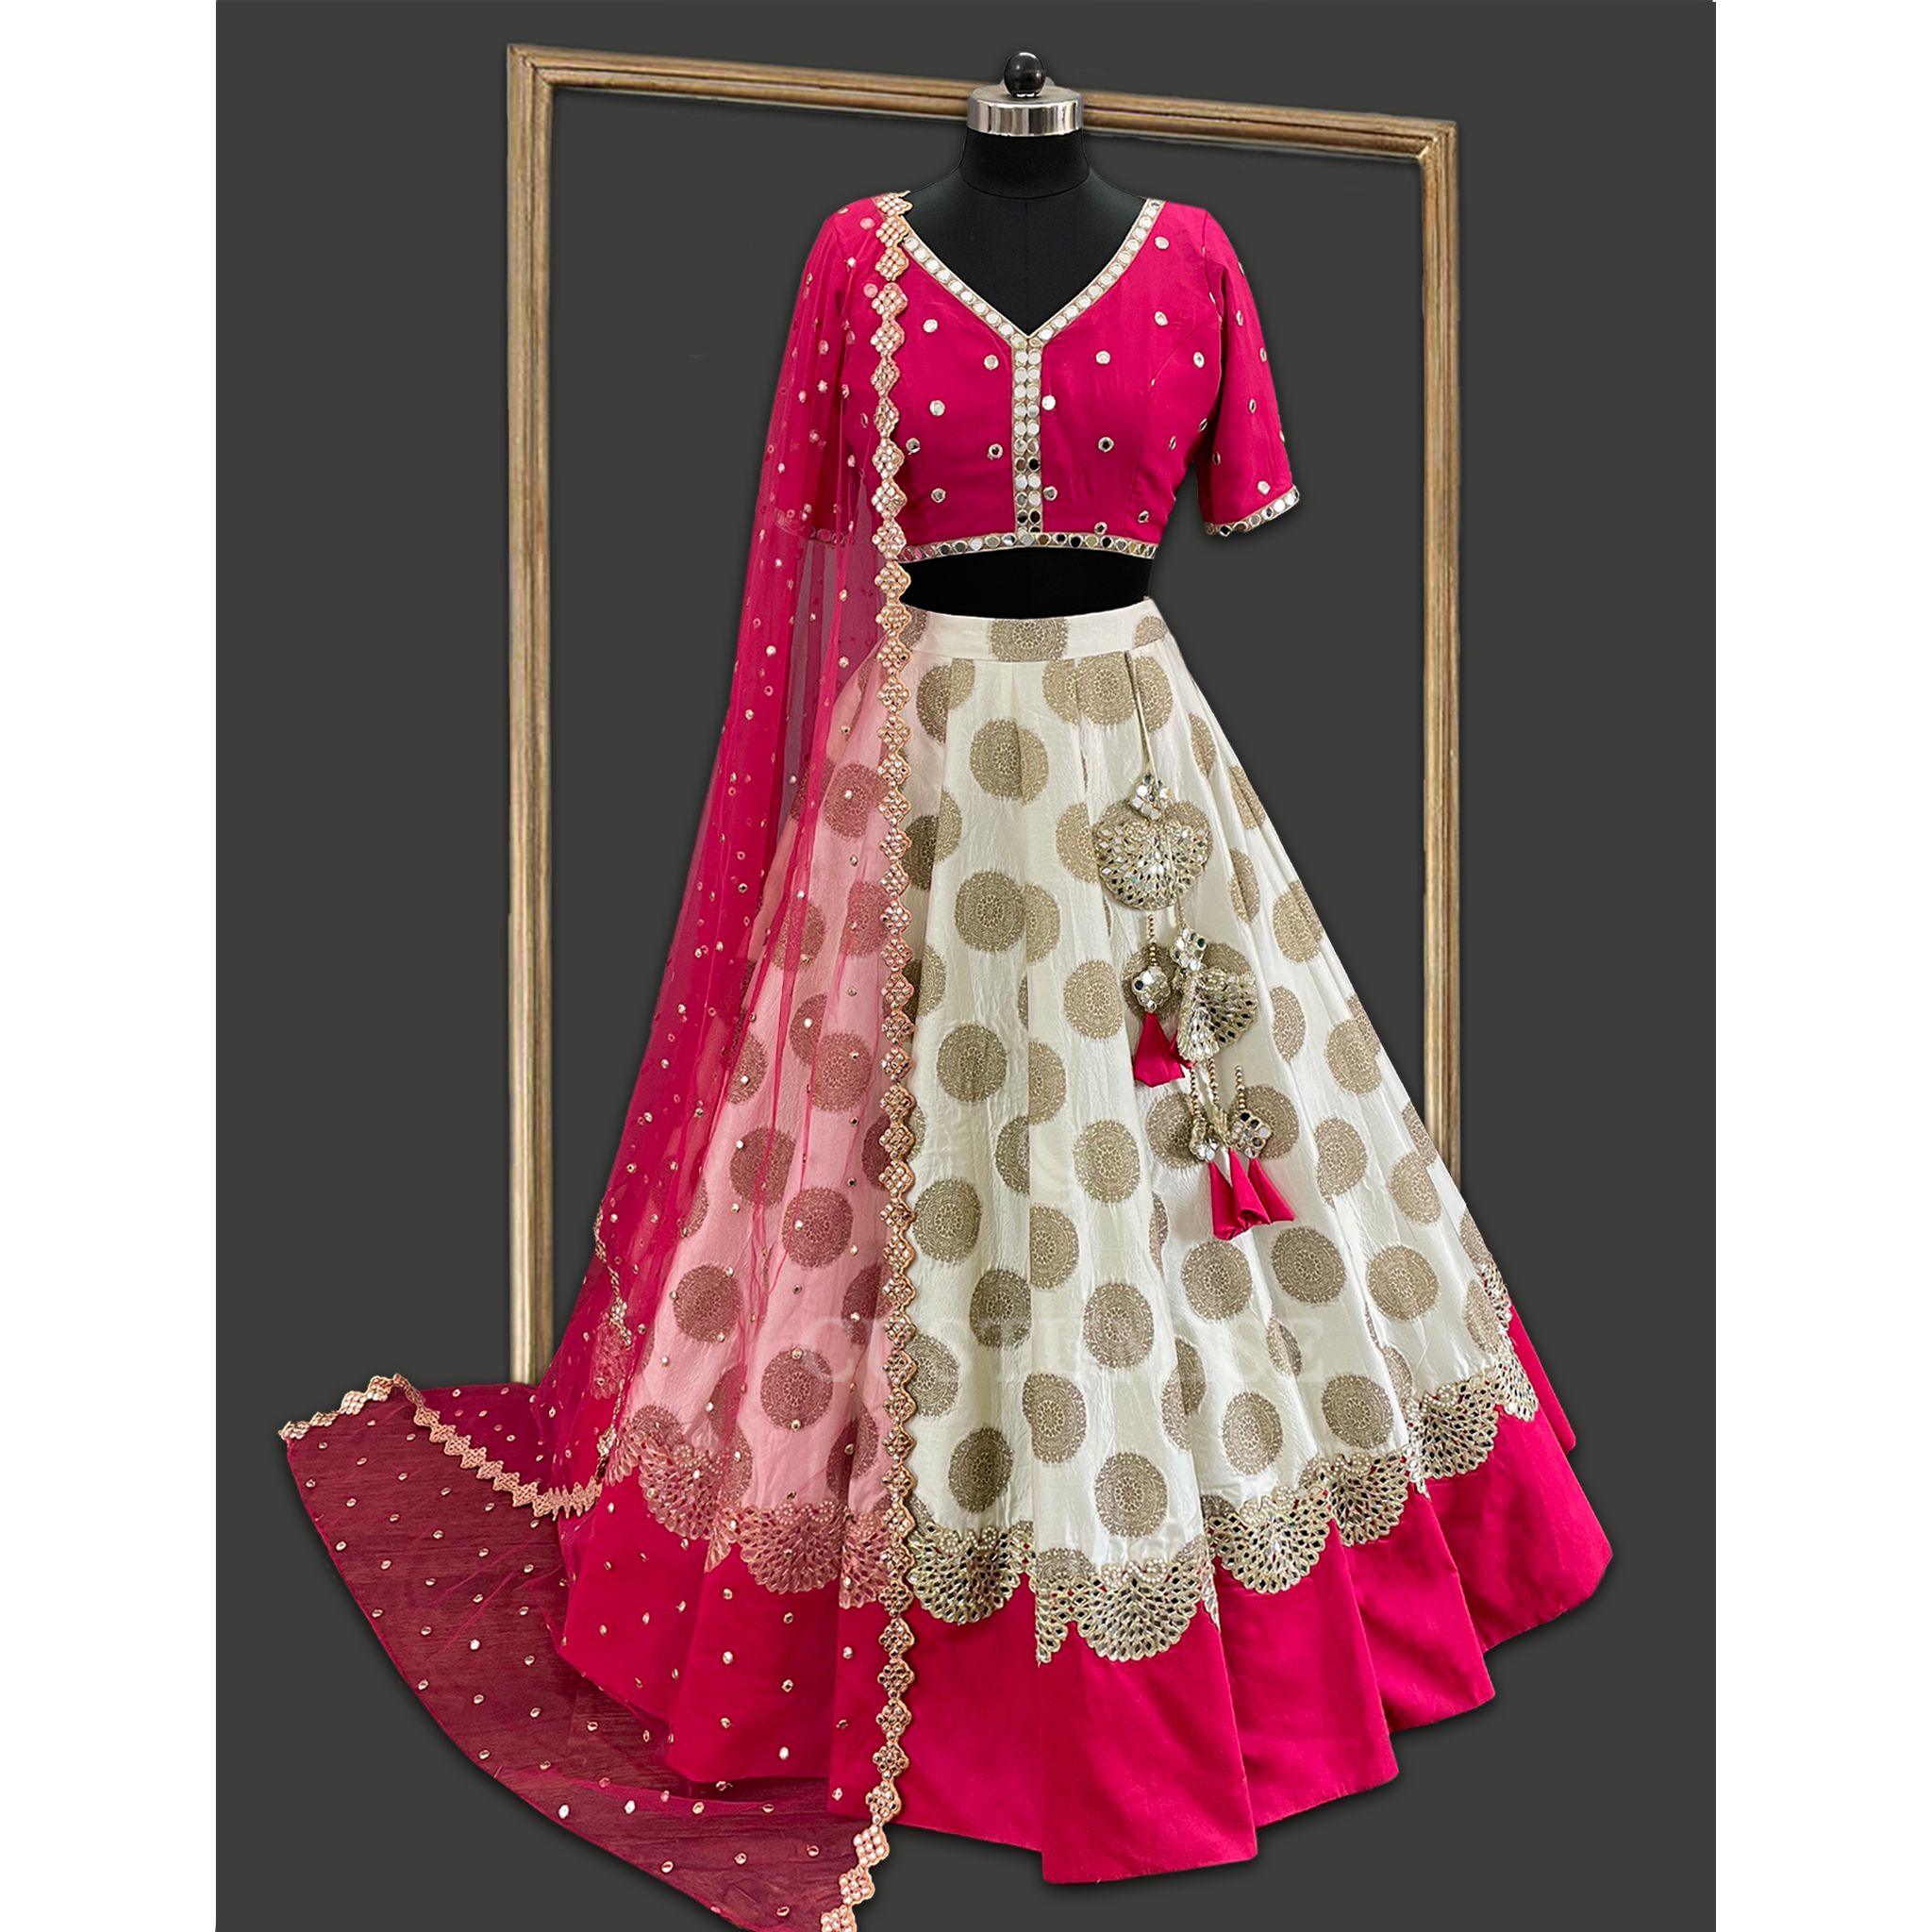 Enchanting Ivory Banarsi Lehenga: Mirror Embellished Beauty in Hot Pink - Indian Designer Bridal Wedding Outfit